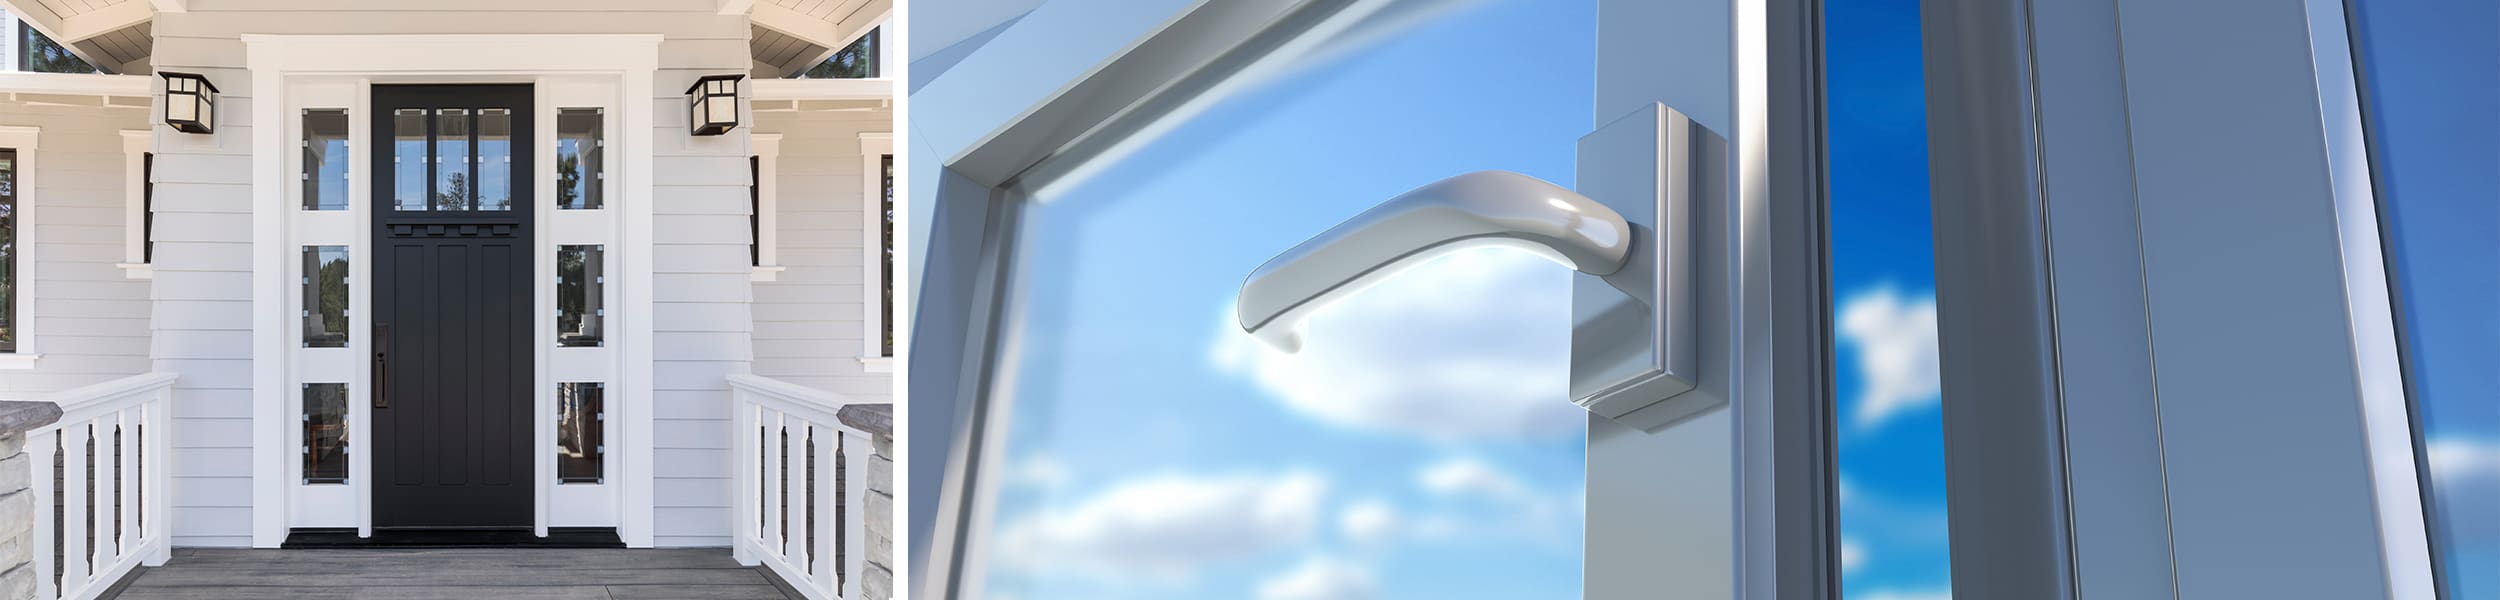 Aurora Material Solutions provides versatile flexible & rigid PVC compound solutions for indoor & outdoor window & door applications.